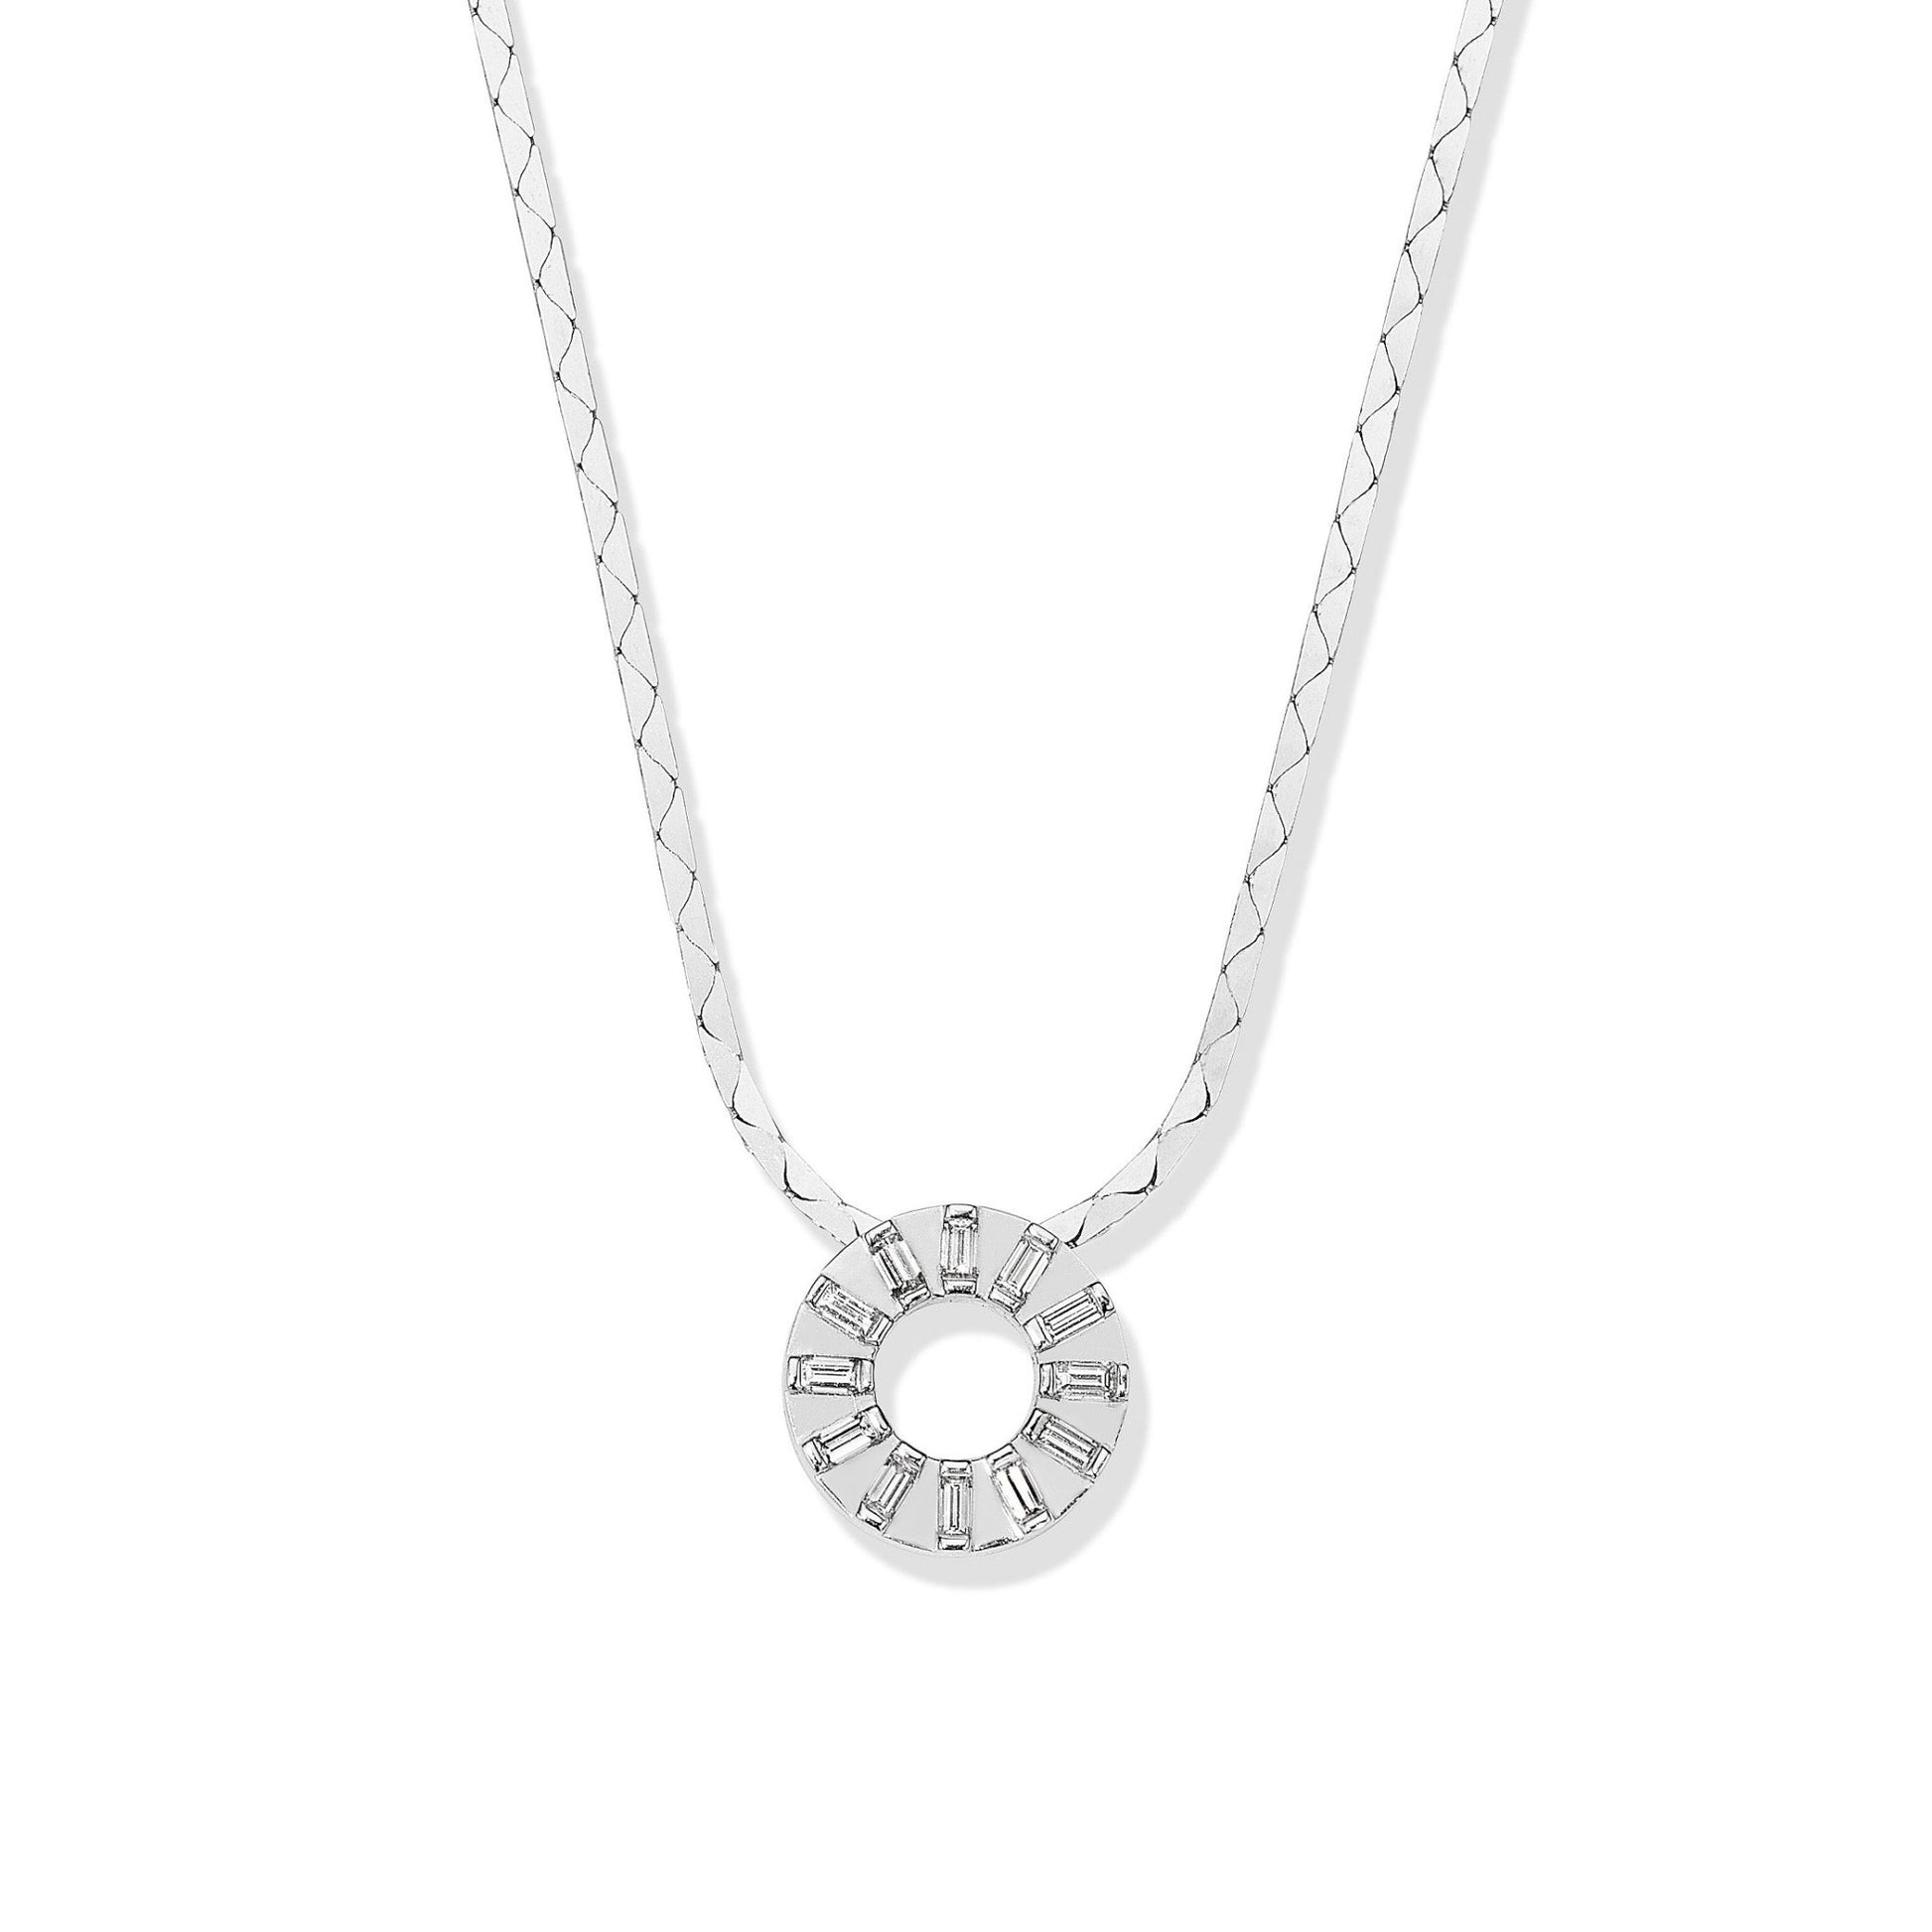 White Gold Sole Pendant Necklace with White Diamonds - Cadar